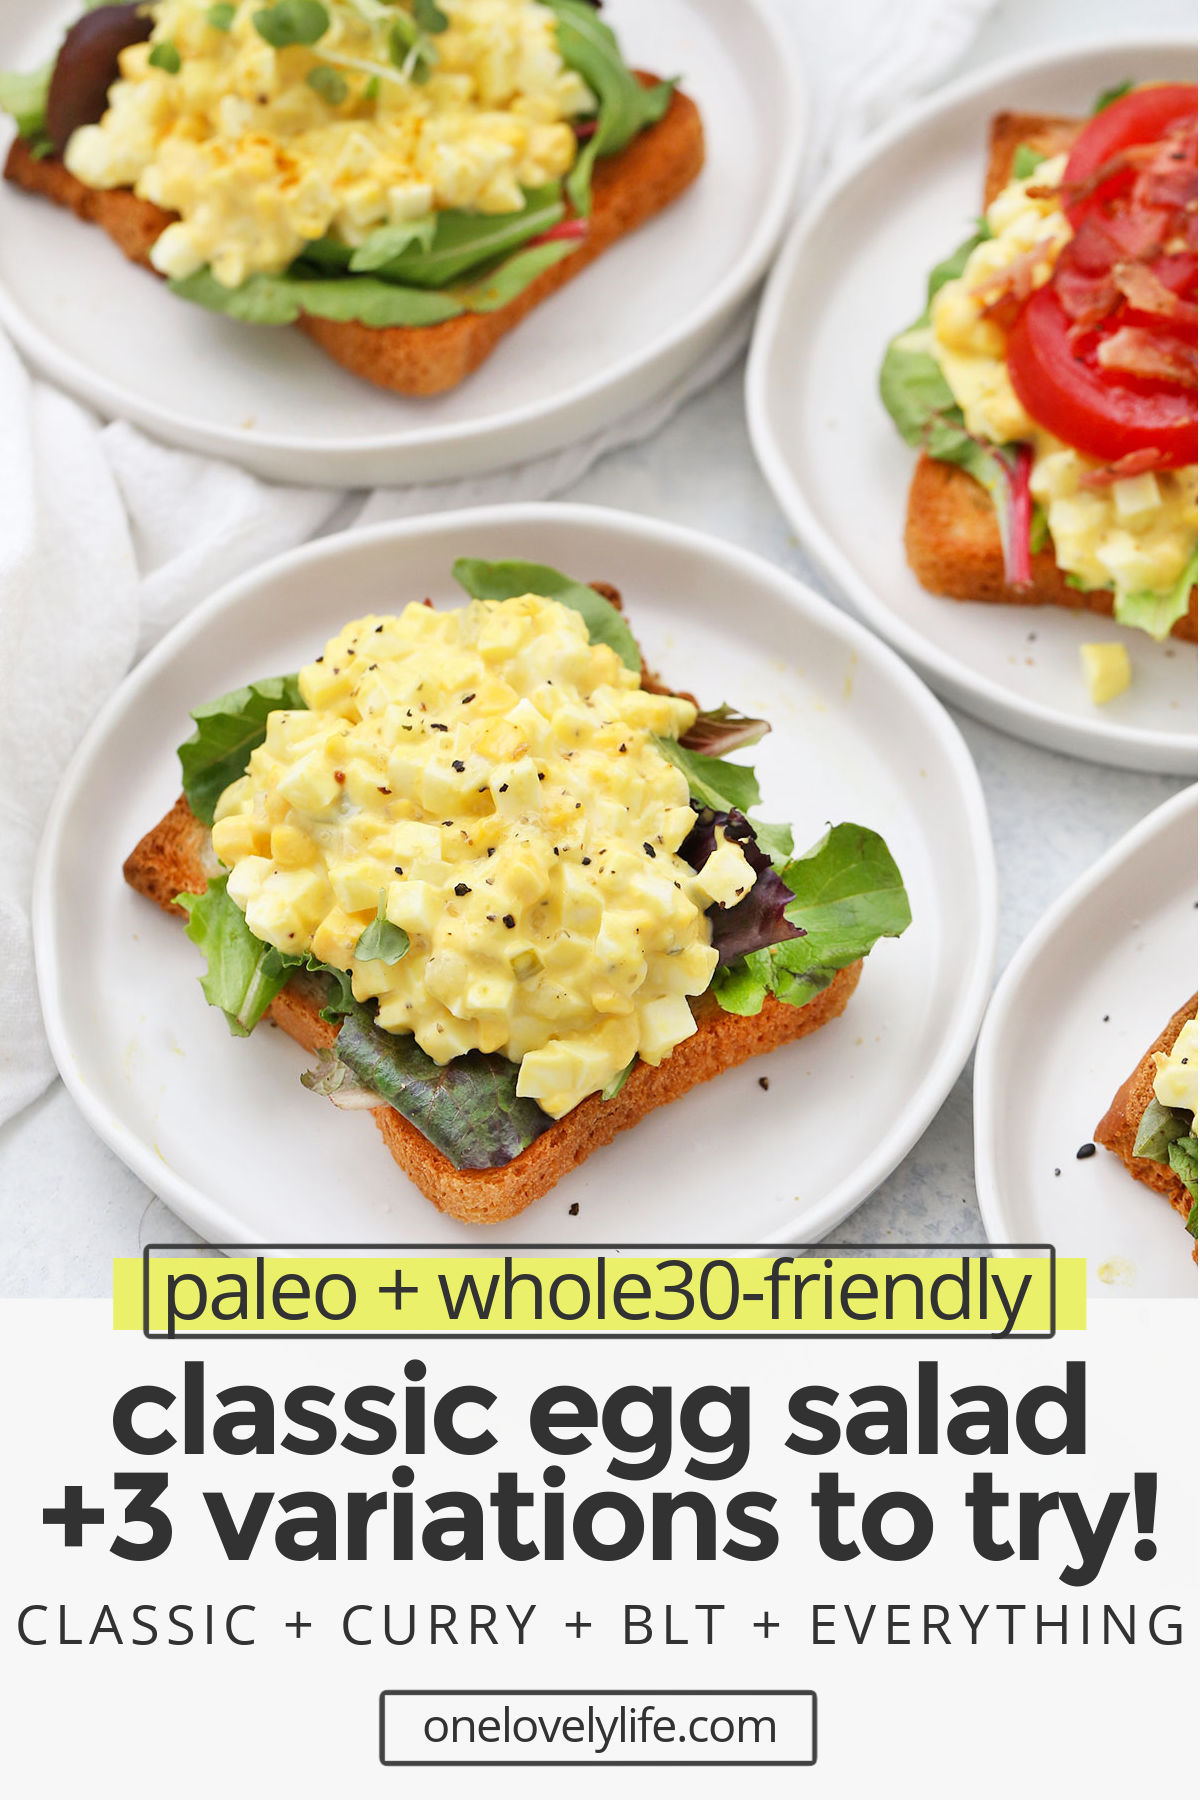 Classic Egg Salad + 3 Yummy Variations to Try - Simple and classic, this egg salad is such a yummy lunch! Don't miss 3 of my favorite delicious variations below! (Gluten free, paleo) // BLT Egg Salad Recipe // Everything Bagel Seasoning Egg Salad // Egg Salad on Toast // Curry Egg Salad // Paleo Egg Salad // Gluten Free Egg Salad #eggsalad #paleo #glutenfree #dairyfree #hardboiledeggs